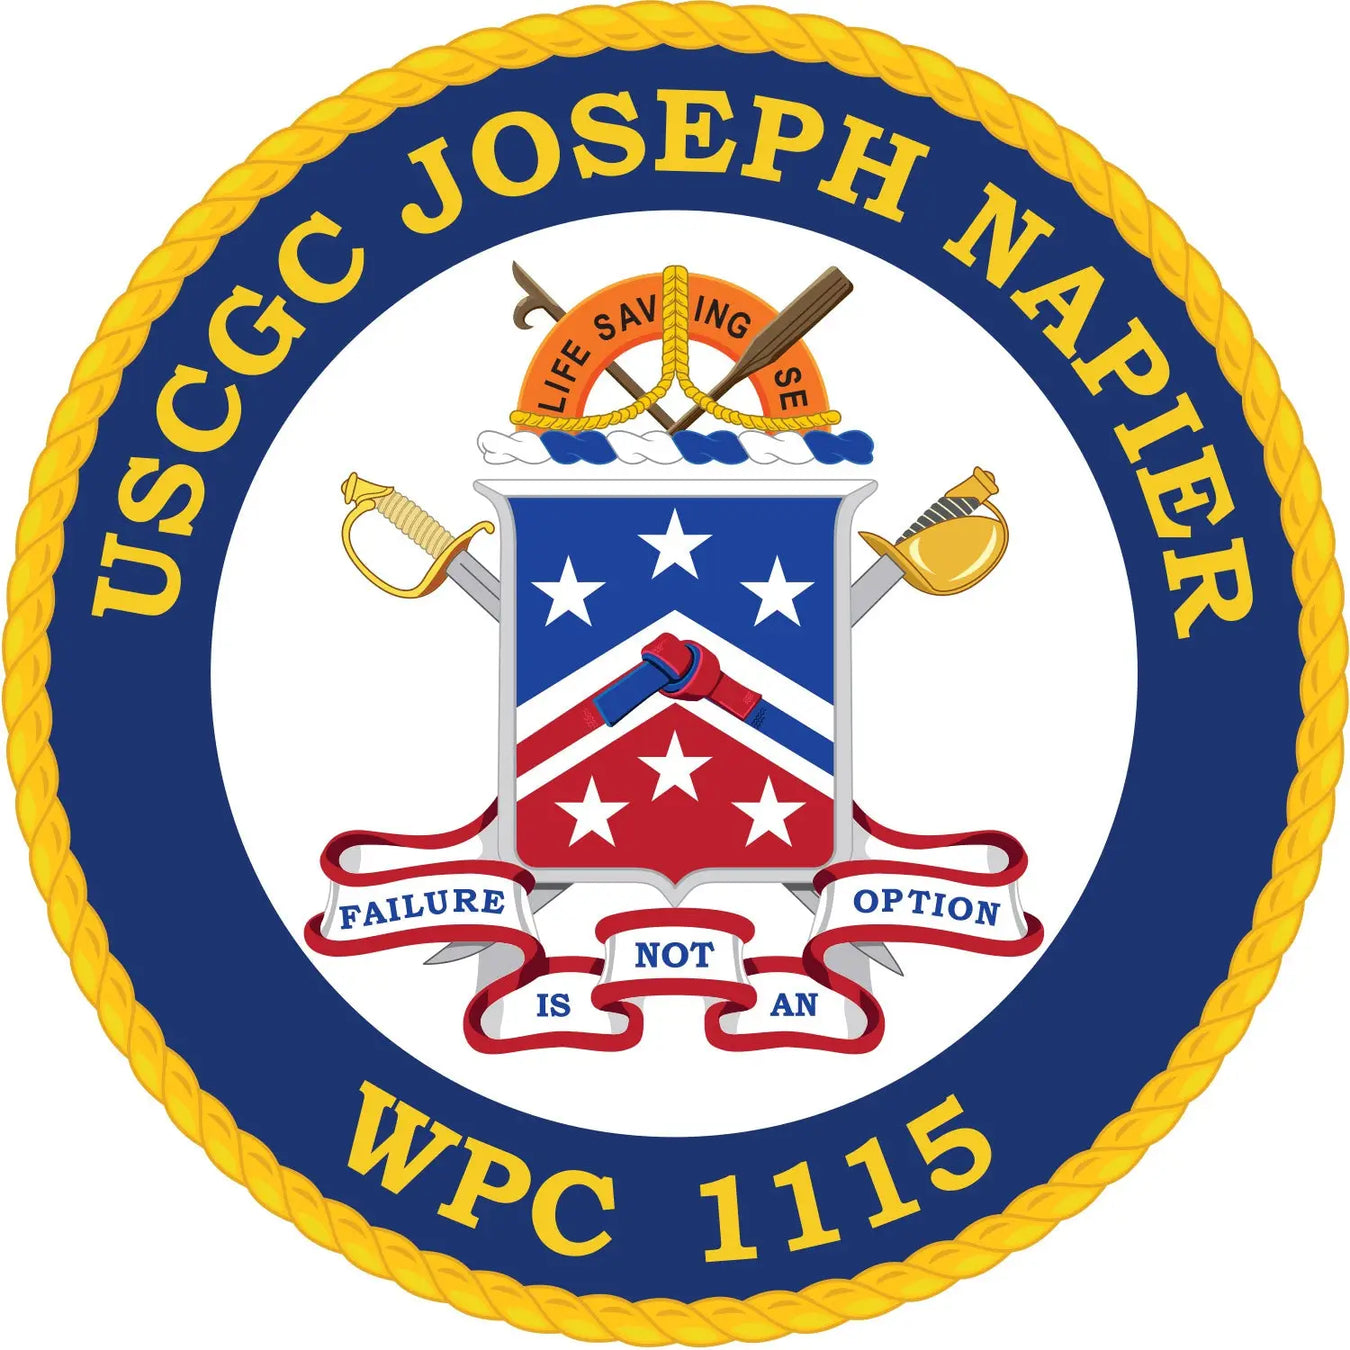 USCGC Joseph Napier (WPC-1115)